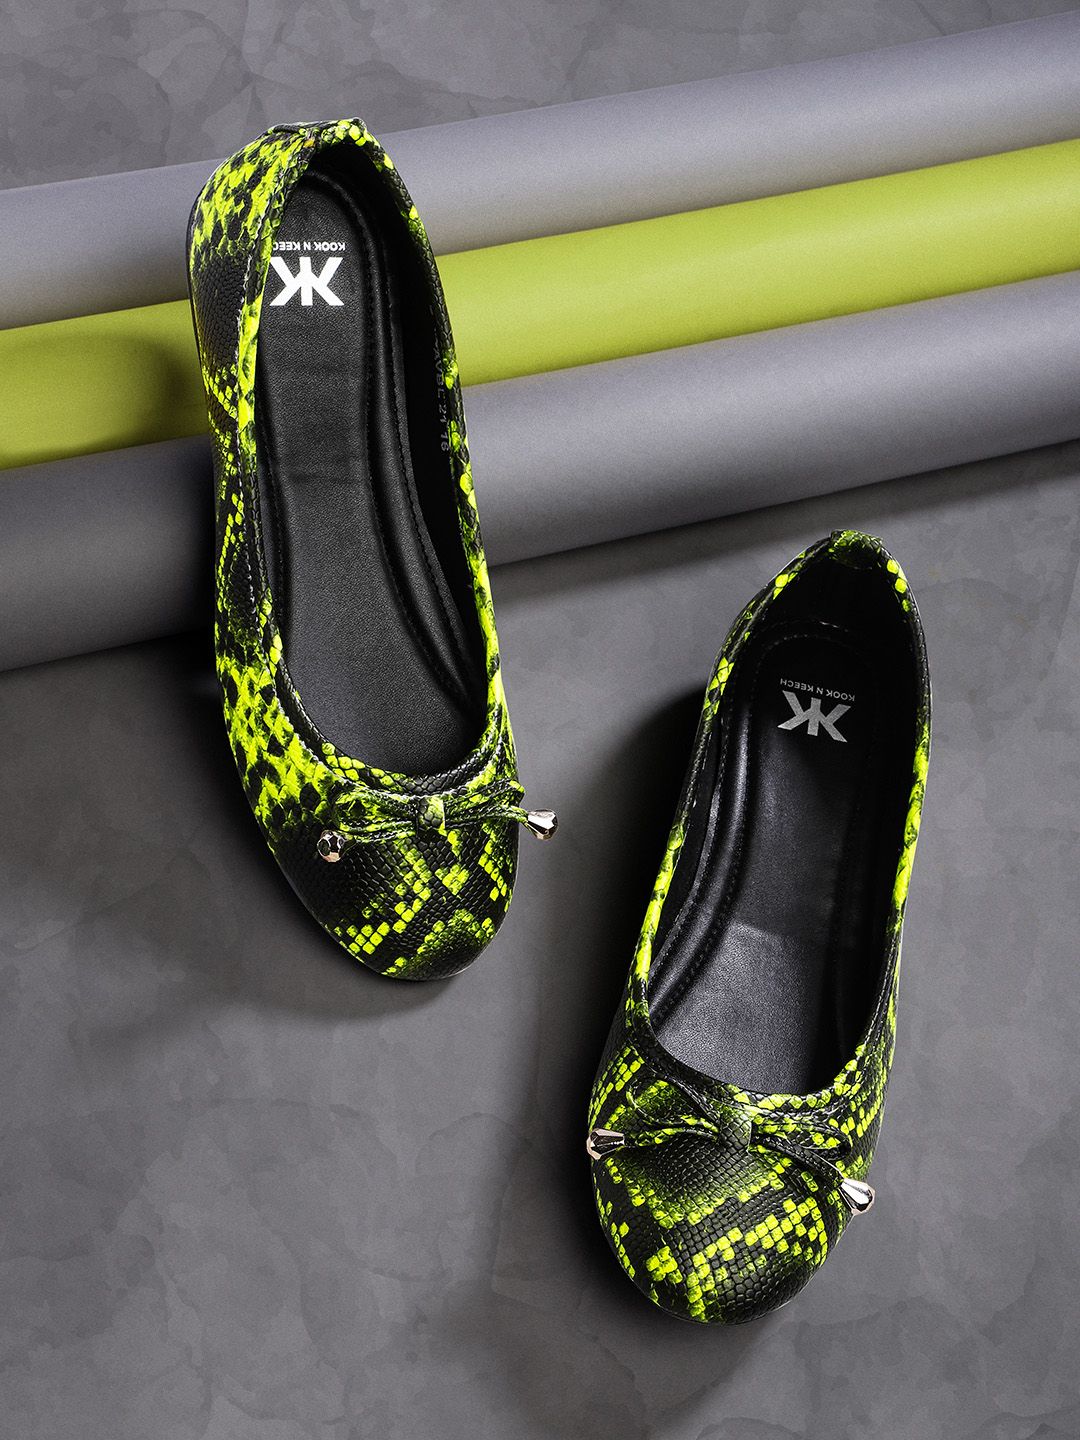 Kook N Keech Women Black & Fluorescent Green Snakeskin Textured Ballerinas with Bow Detail Price in India